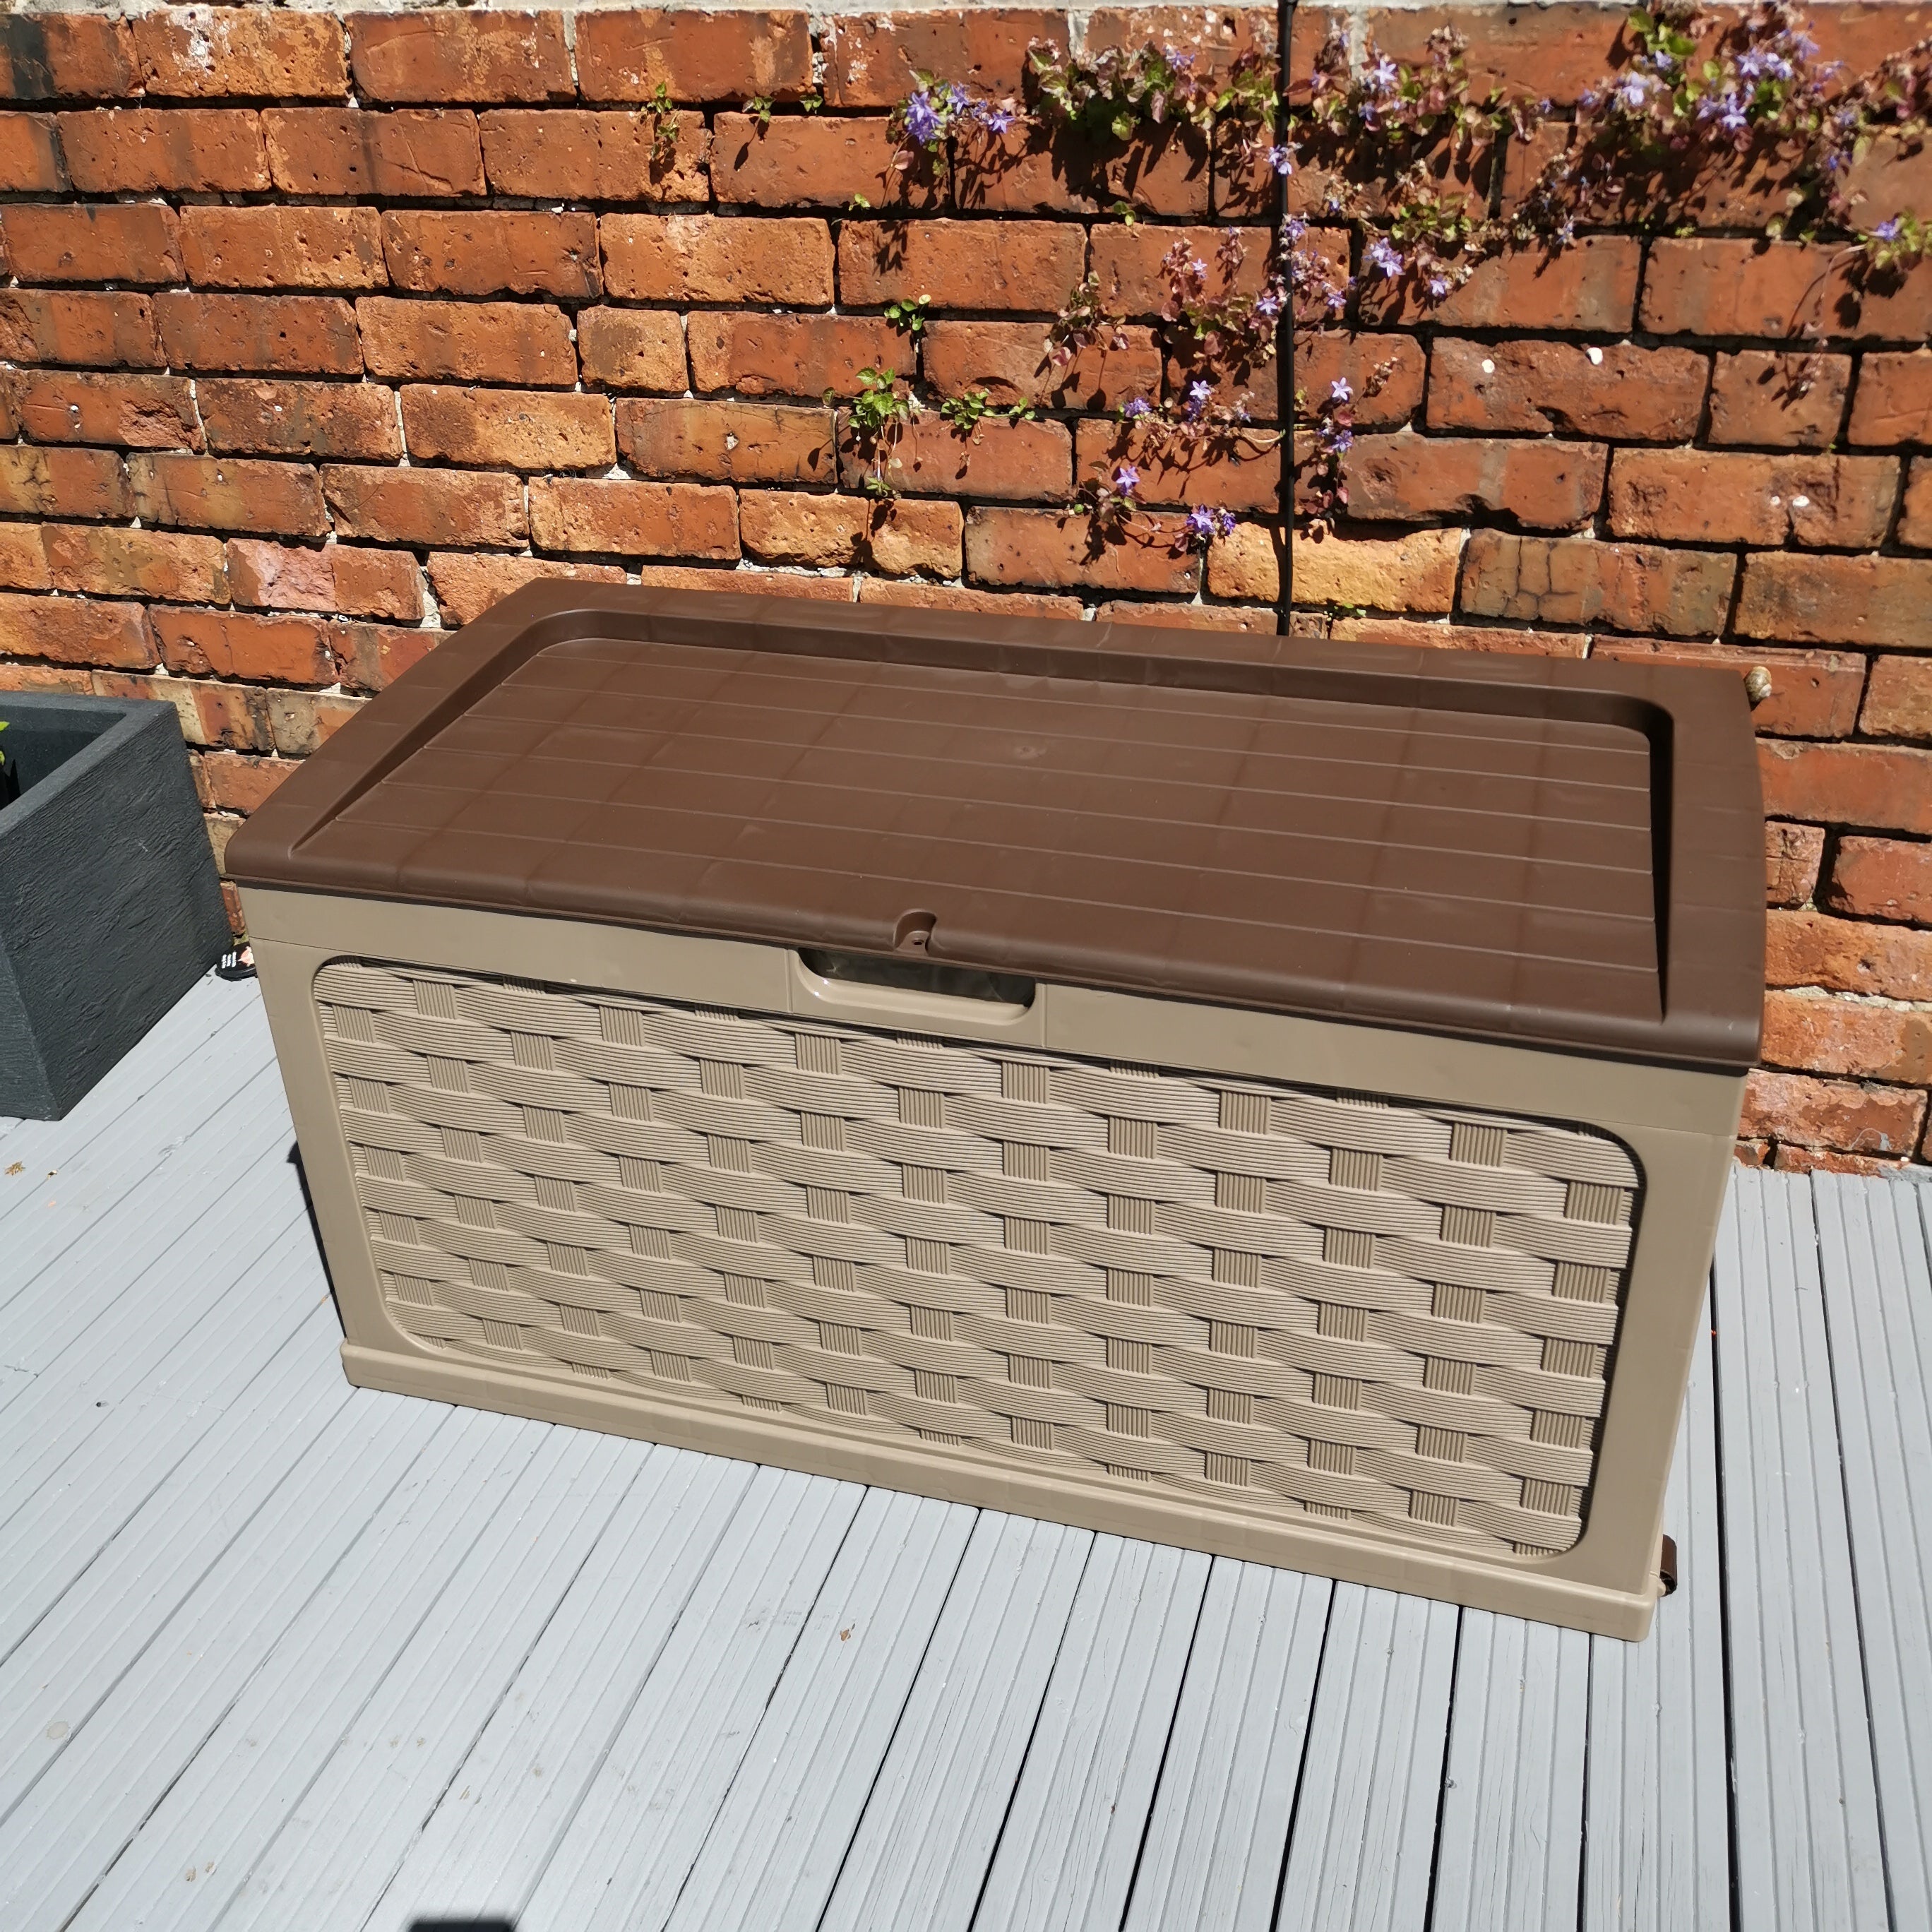 335 Litre Rattan Style Garden Cushion Storage Box with Sit on Lid – Dark Brown